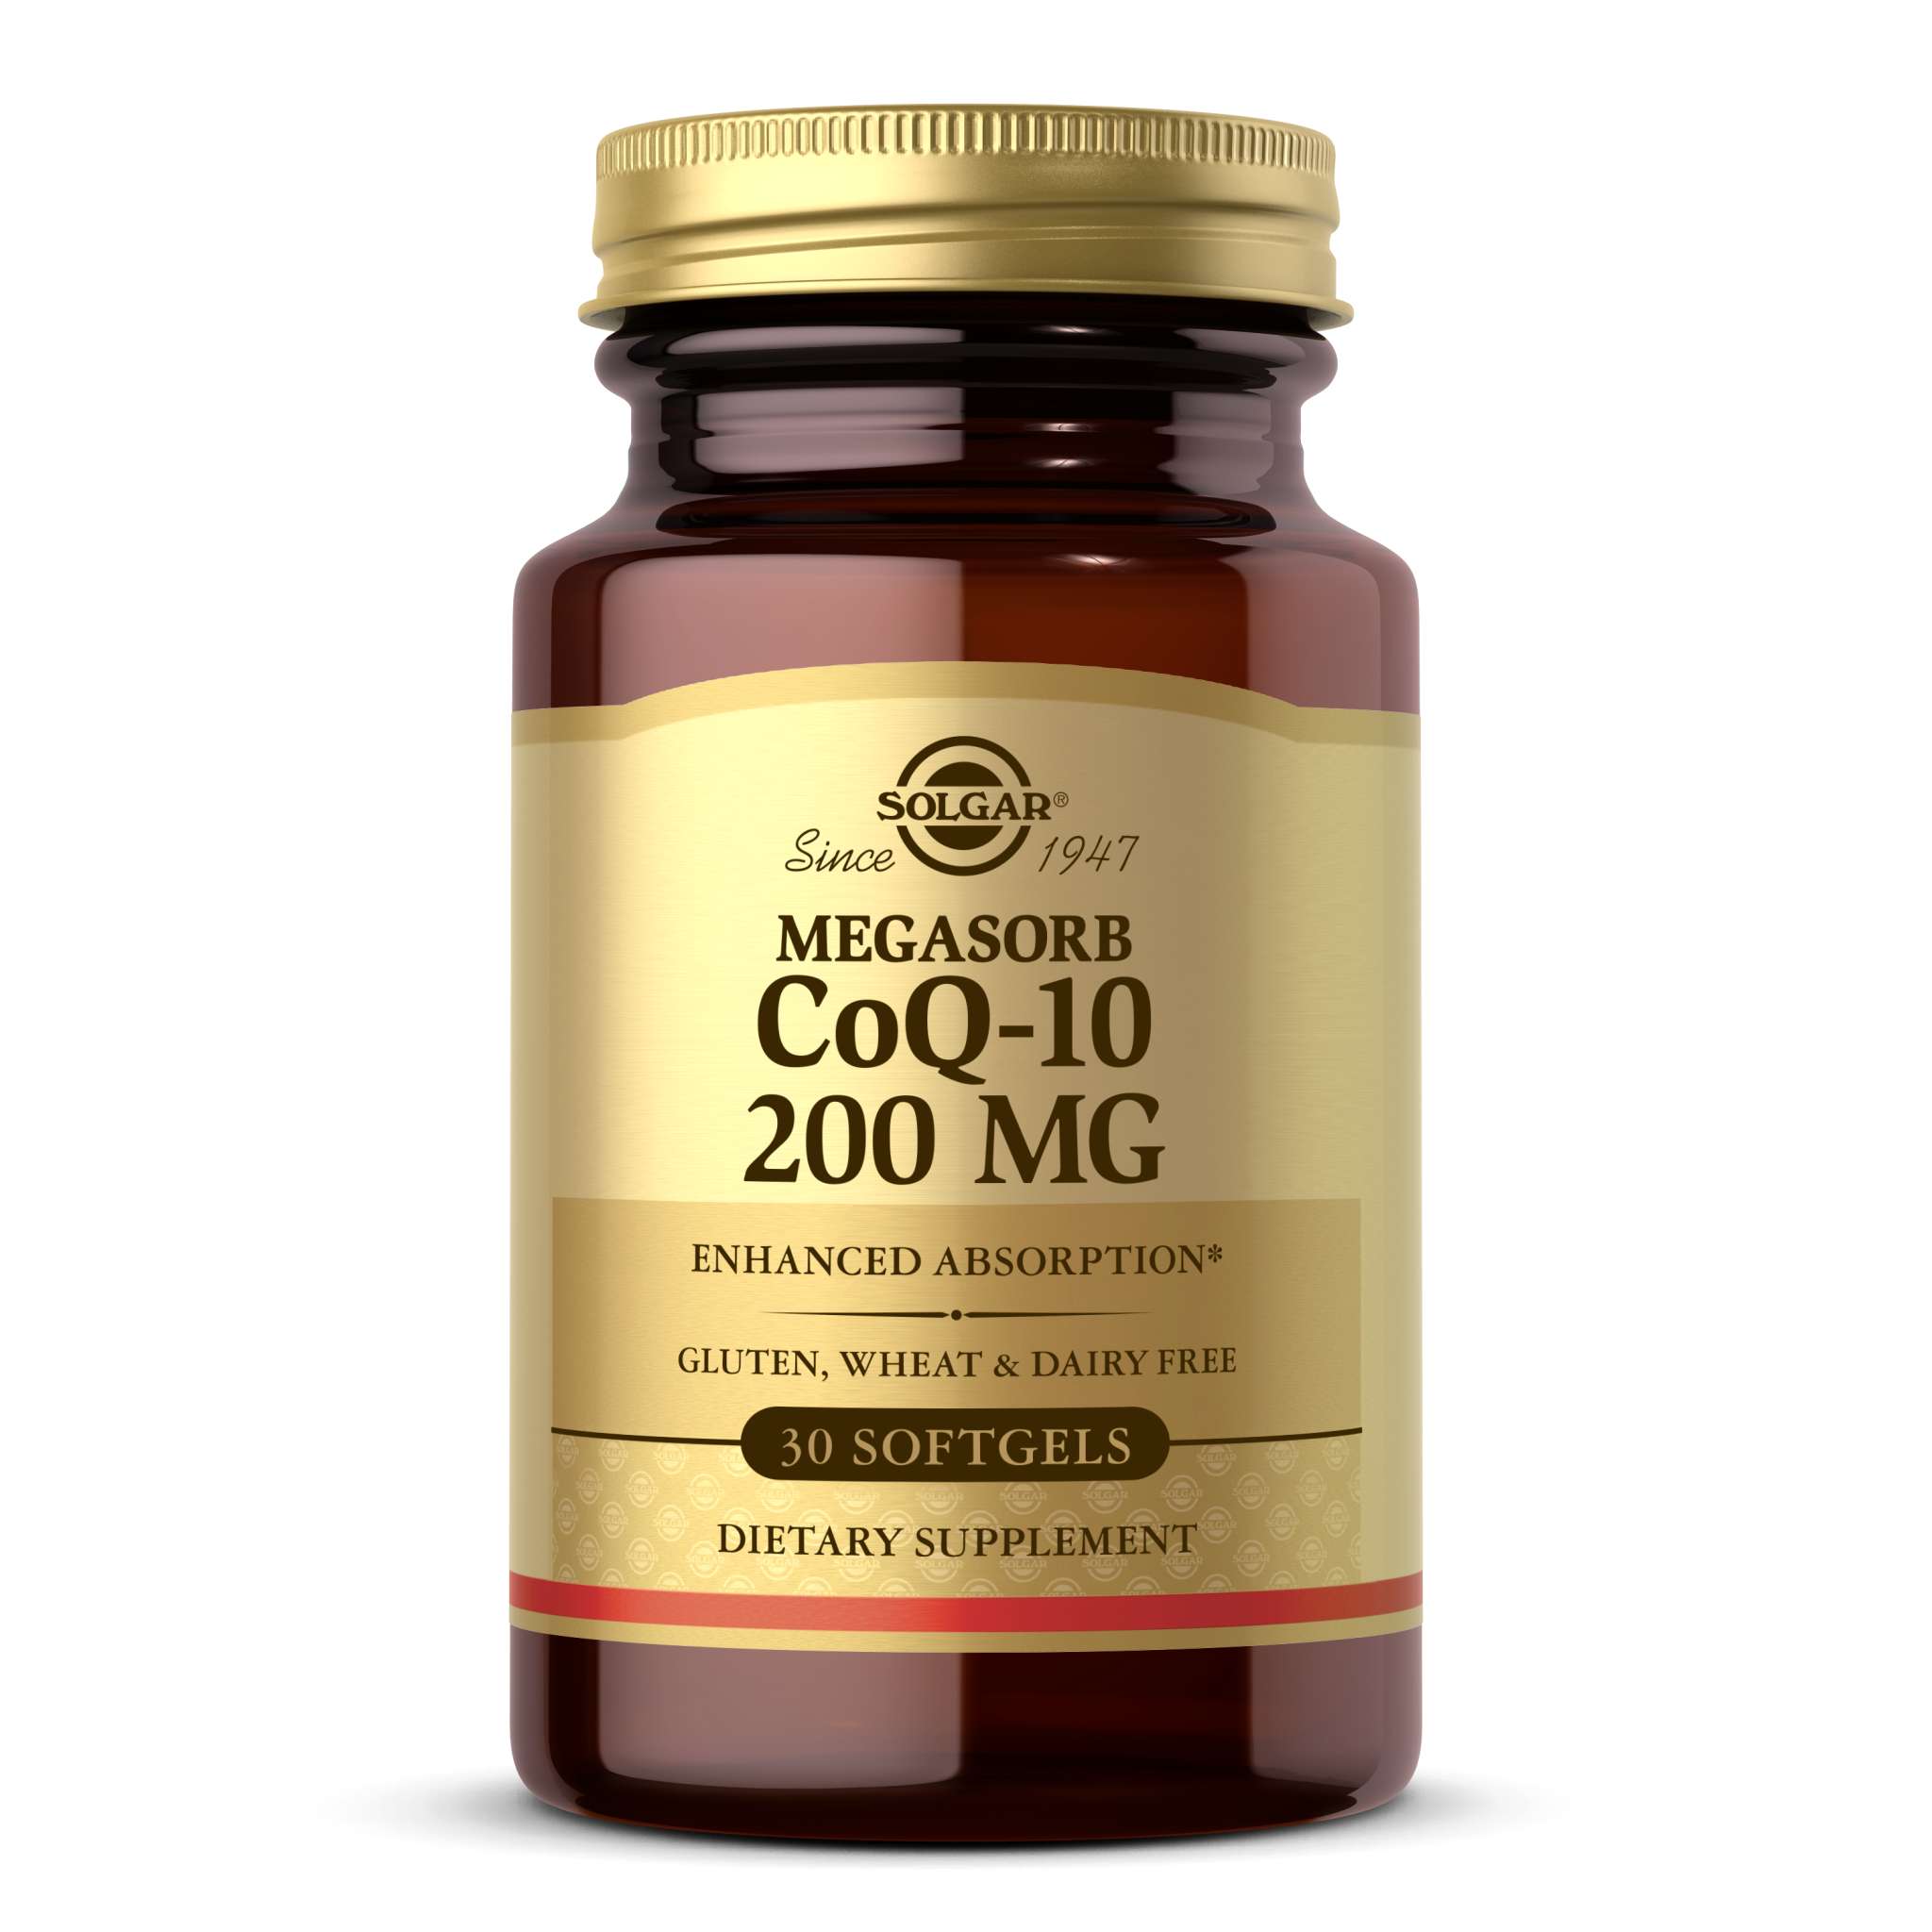 Solgar - Coq10 200 mg softgel